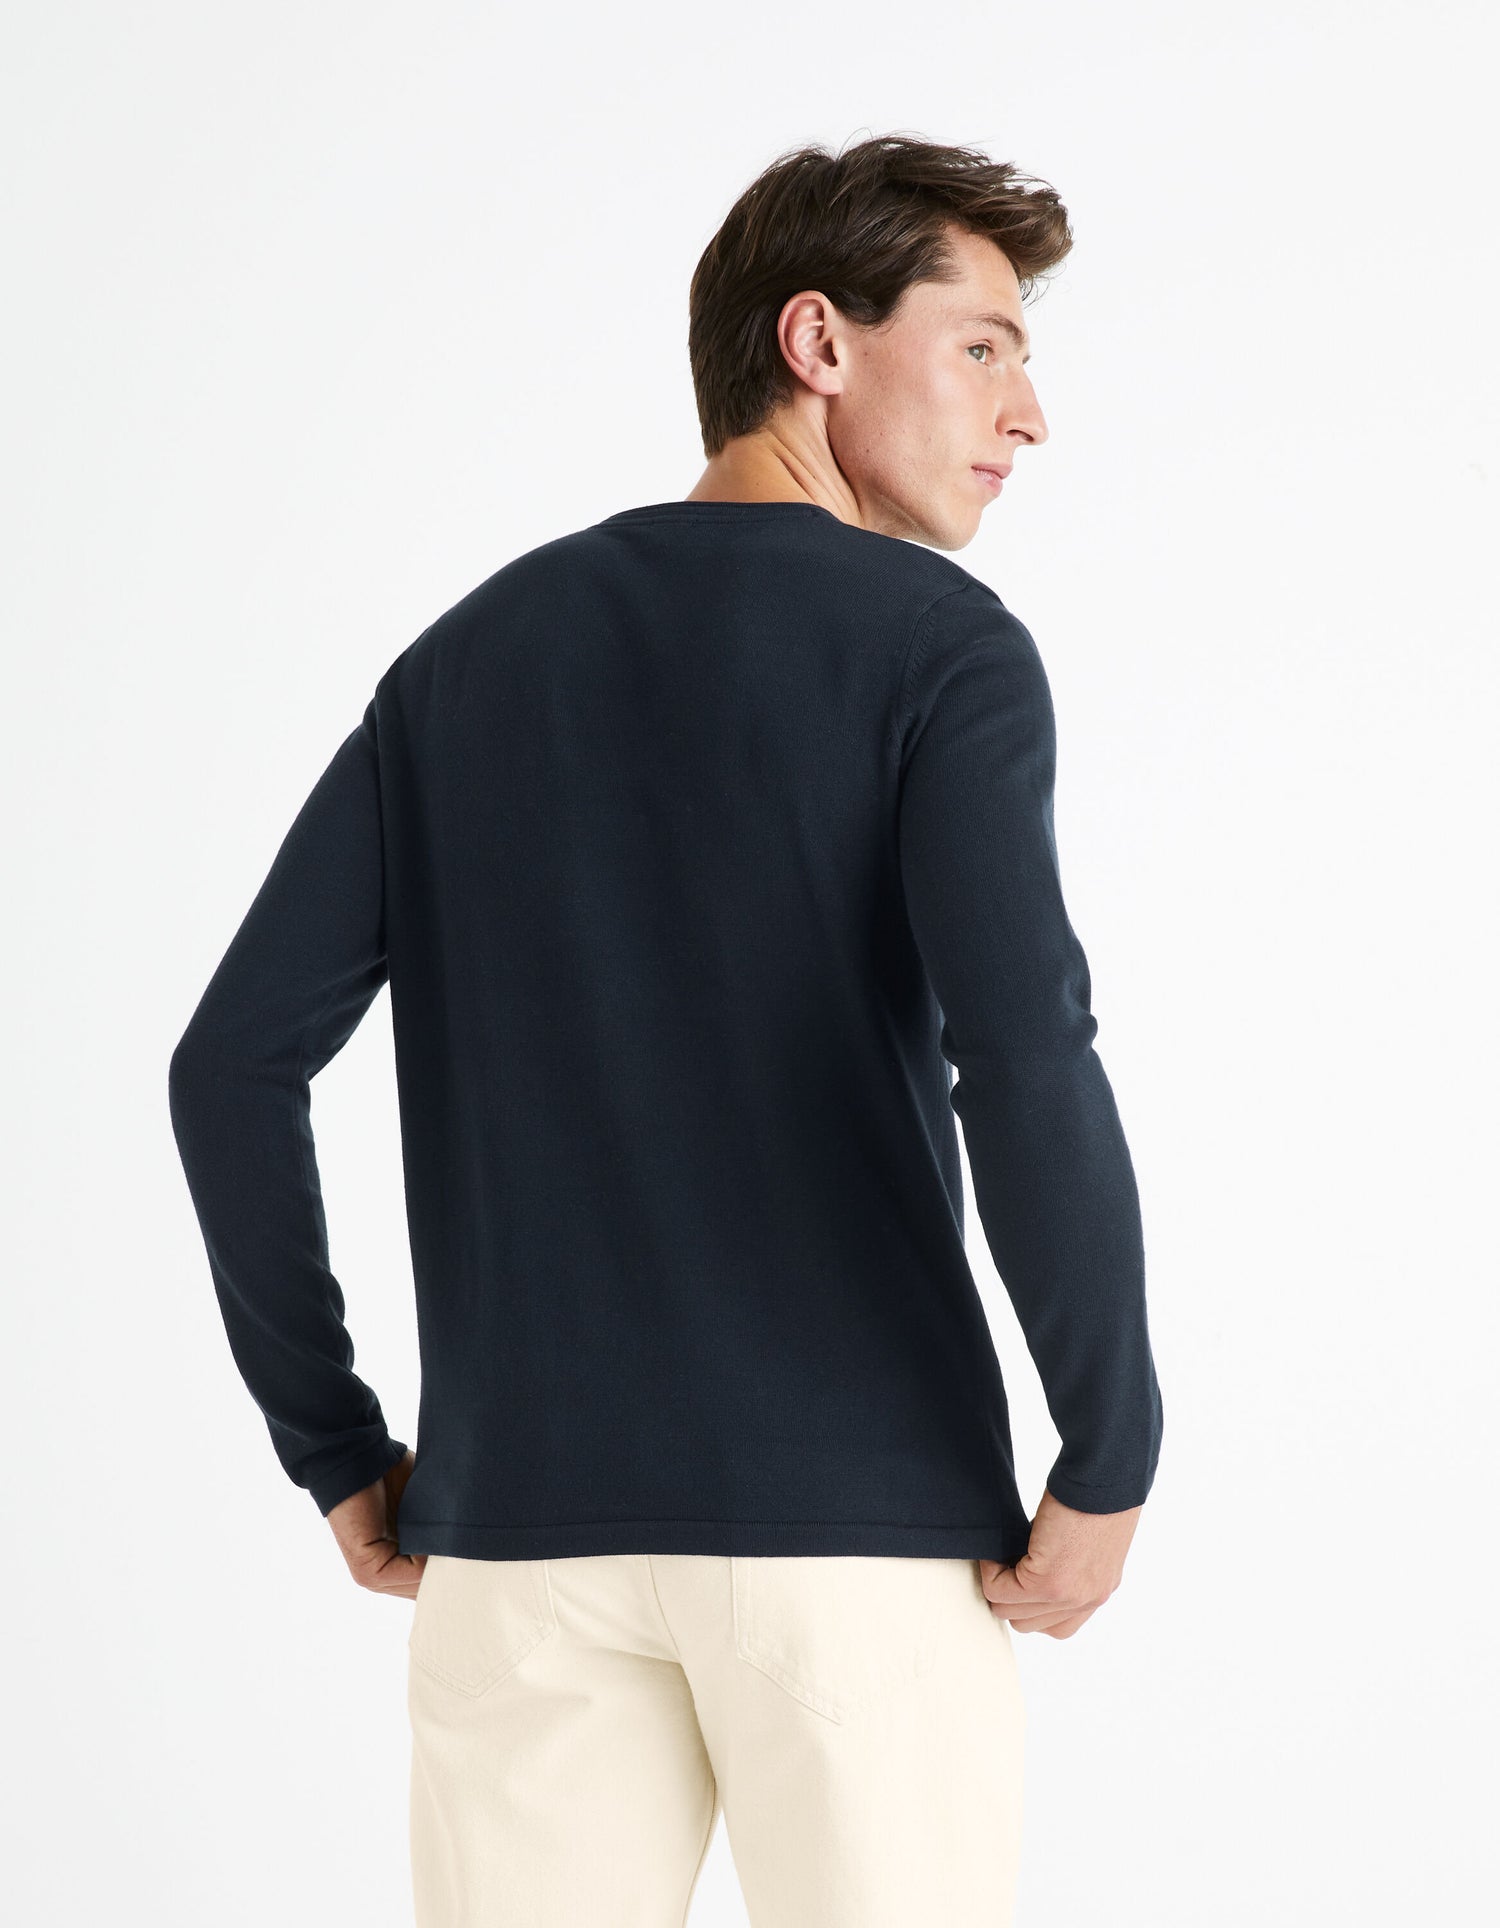 Tunisian Collar Sweater 100% Cotton - Navy_FELANO_NAVY_04